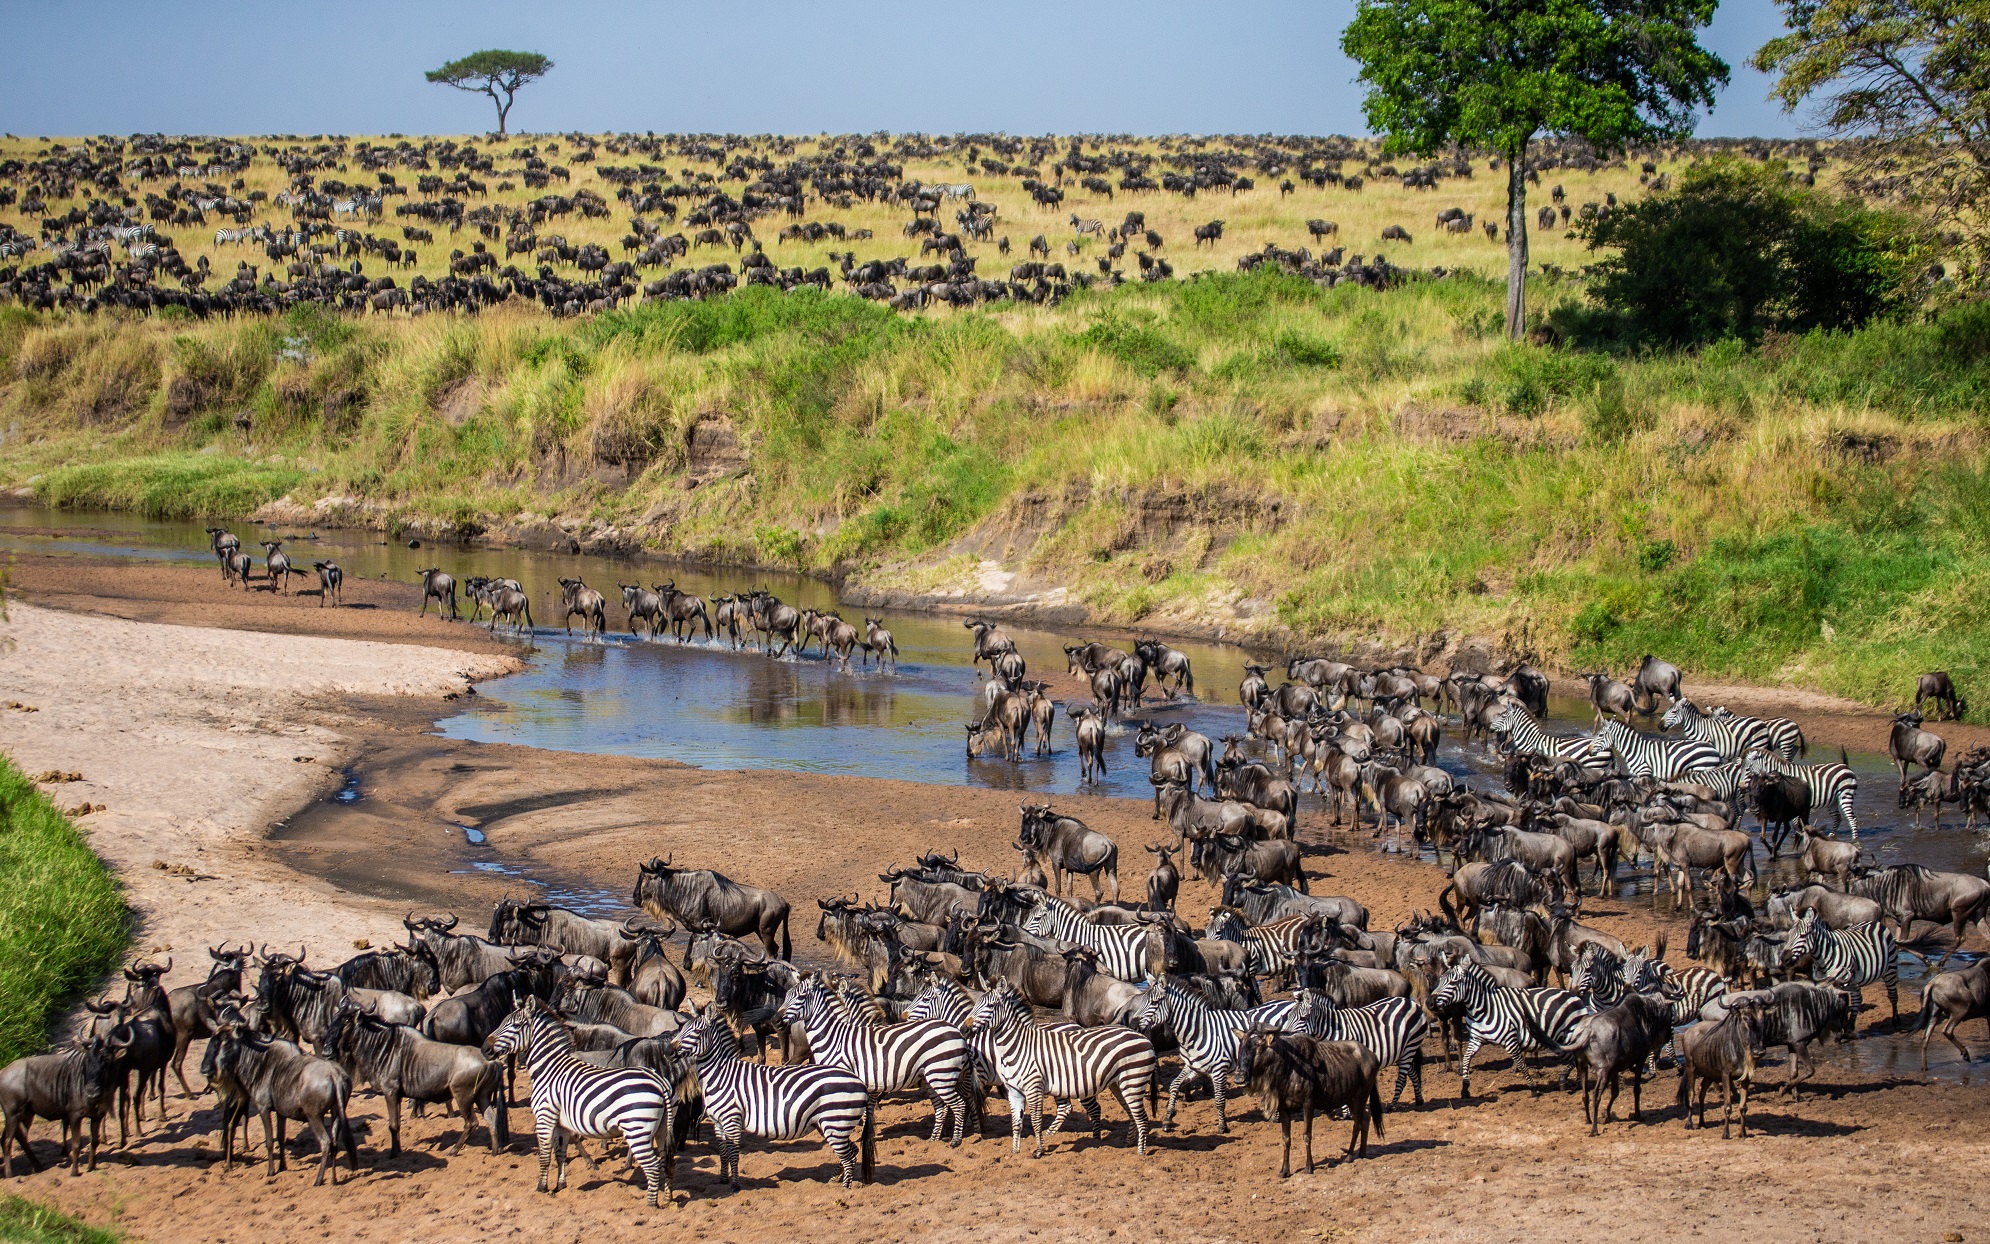 big-herd-of-wildebeest-in-the-savannah-great-migration-kenya-tanzania-maasai-mara-national-park228184245-3.jpeg